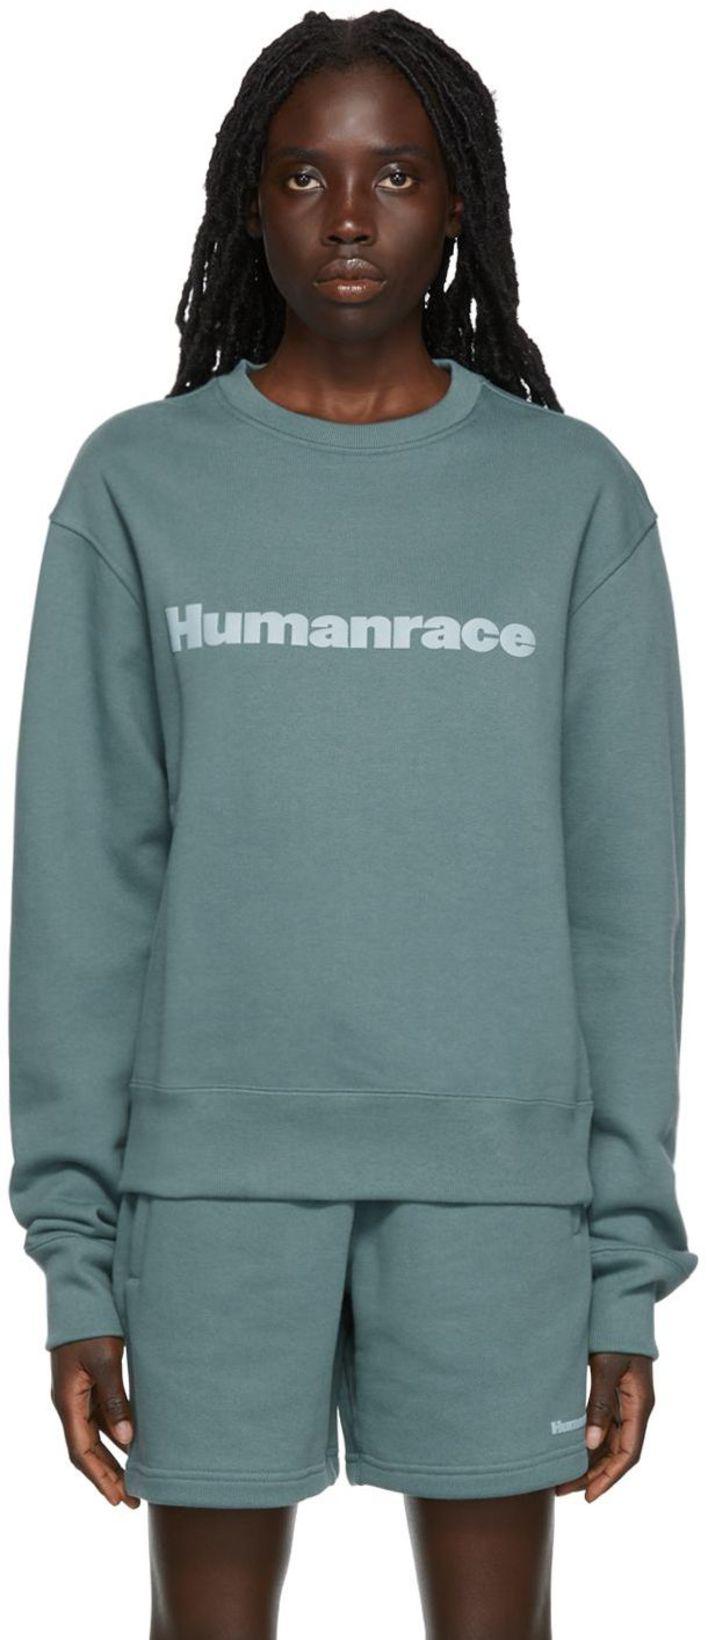 Green Humanrace Basics Sweatshirt by ADIDAS X HUMANRACE BY PHARRELL WILLIAMS